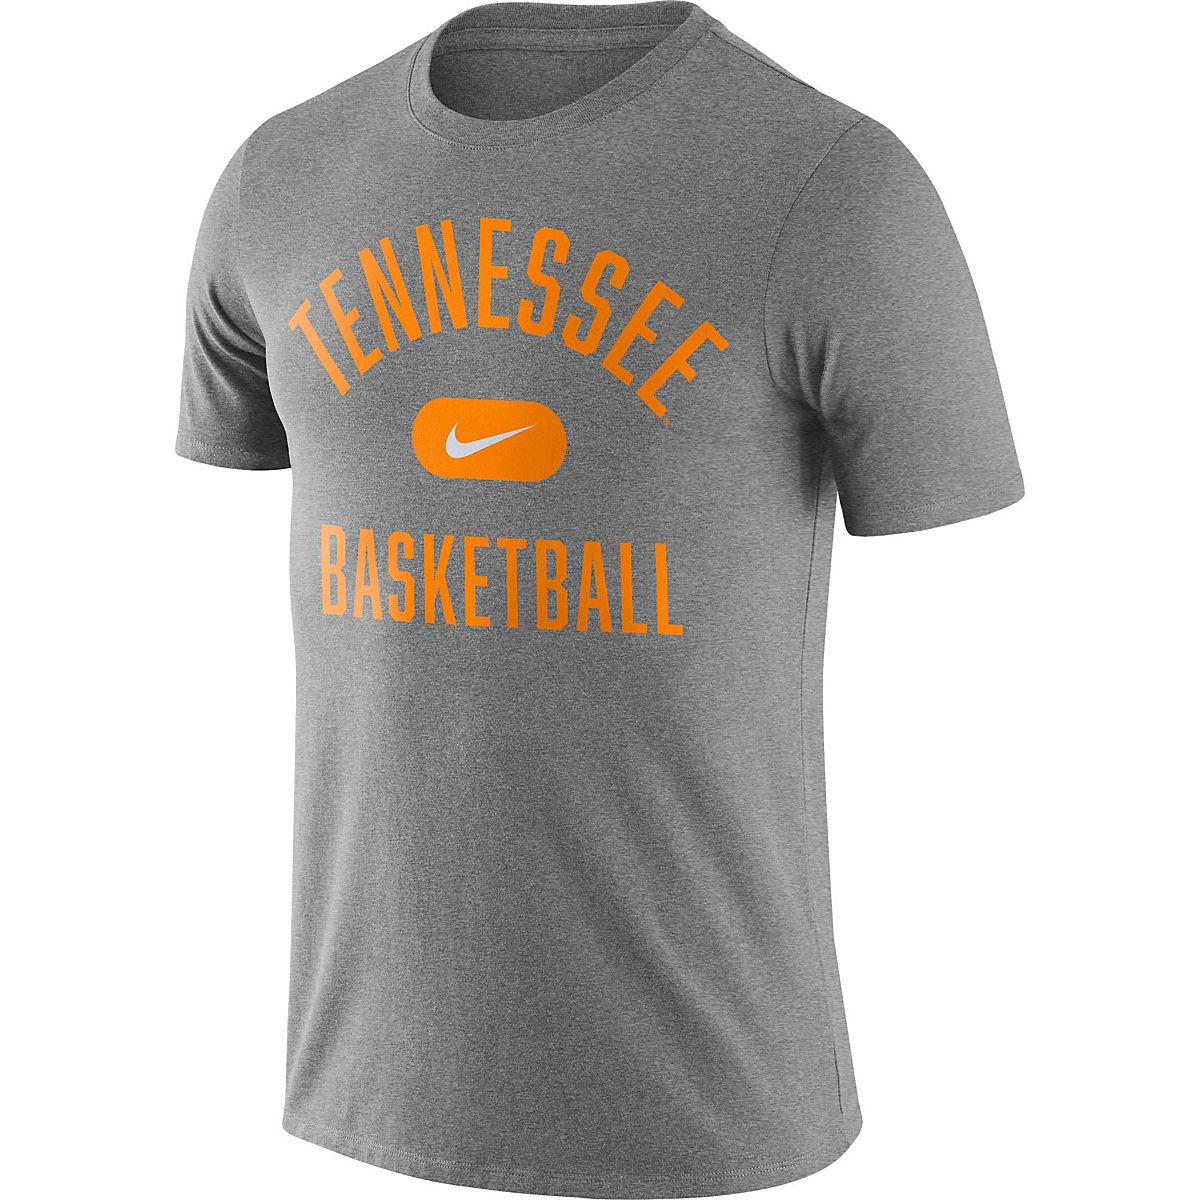 Nike Men's University of Tennessee Basketball Team Arch Short Sleeve T ...